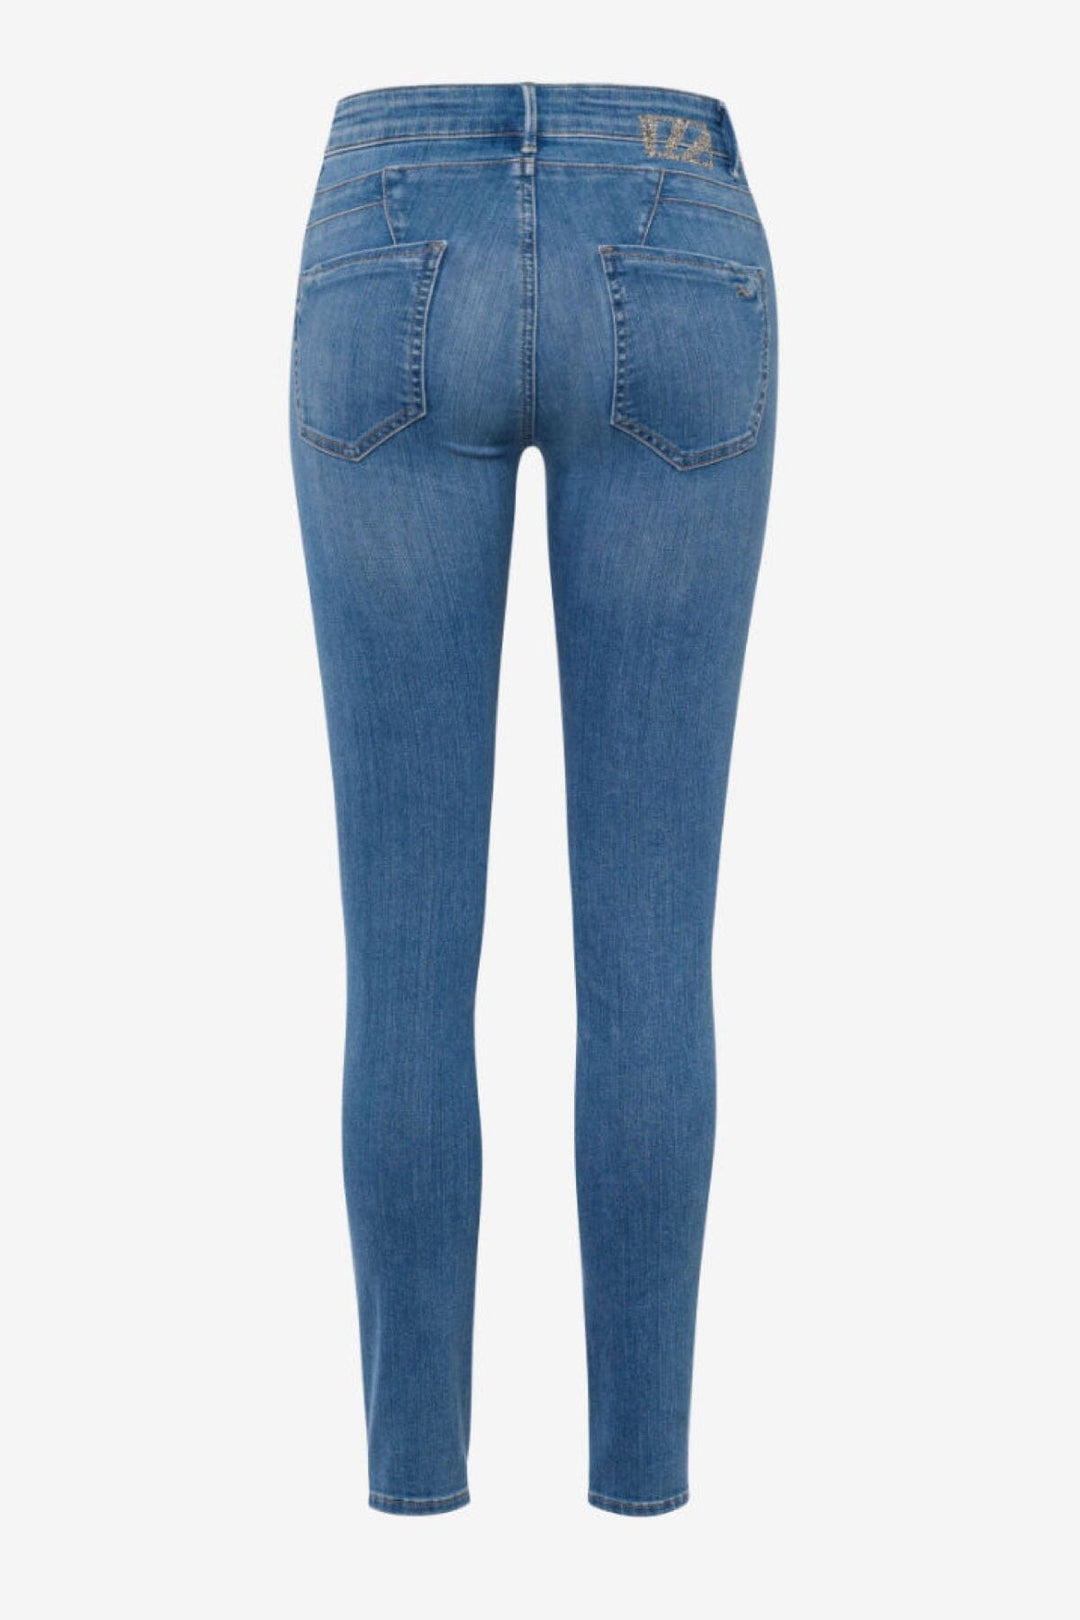 Jean Skinny Ana Femme - Bas - Pantalon - Jeans Brax